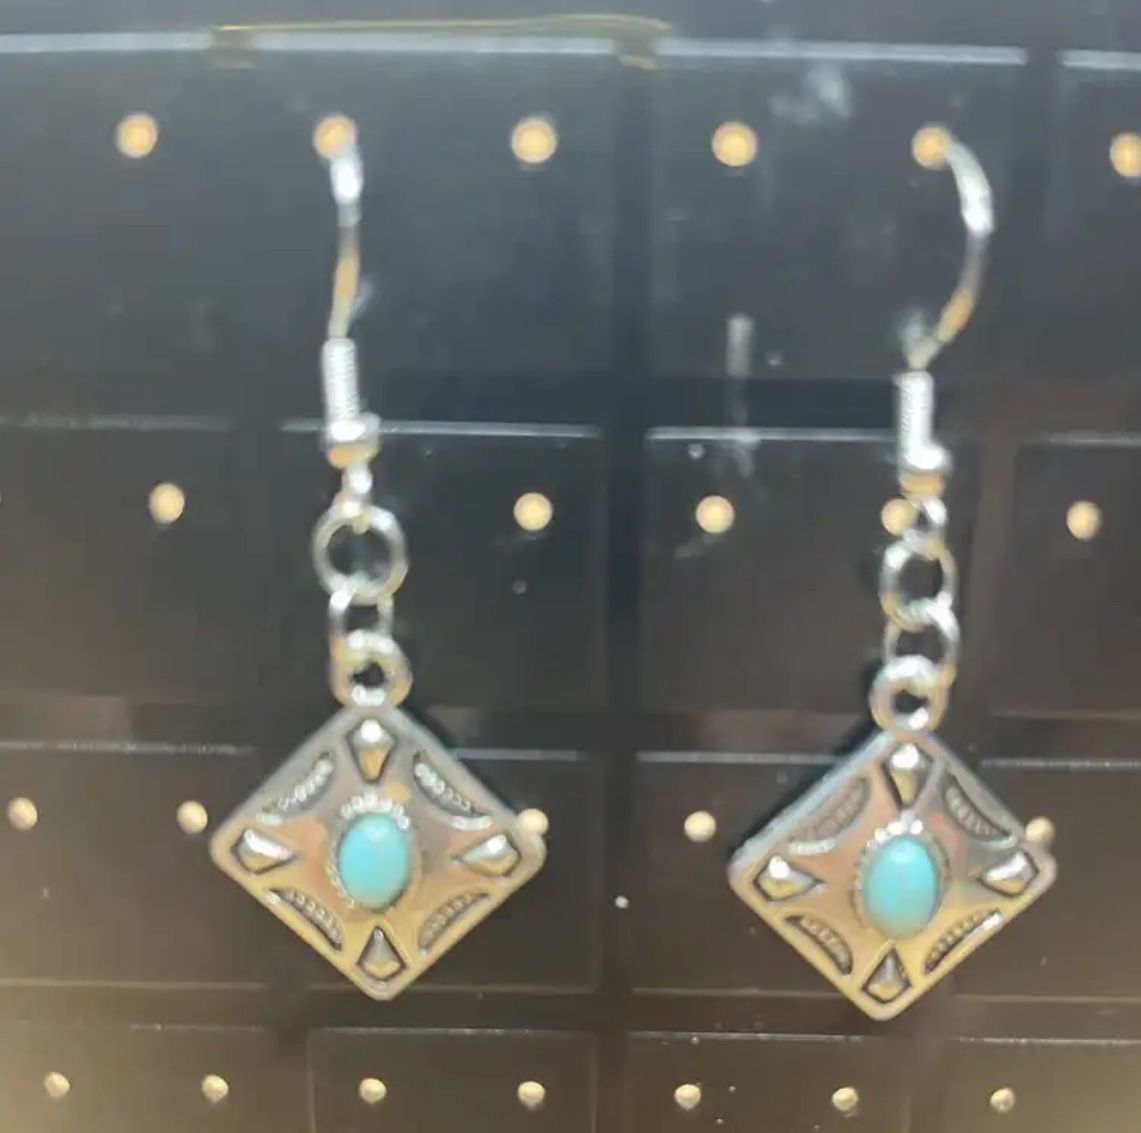 Turquoise Mosaic Material Diamond Design Dangling Earrings 